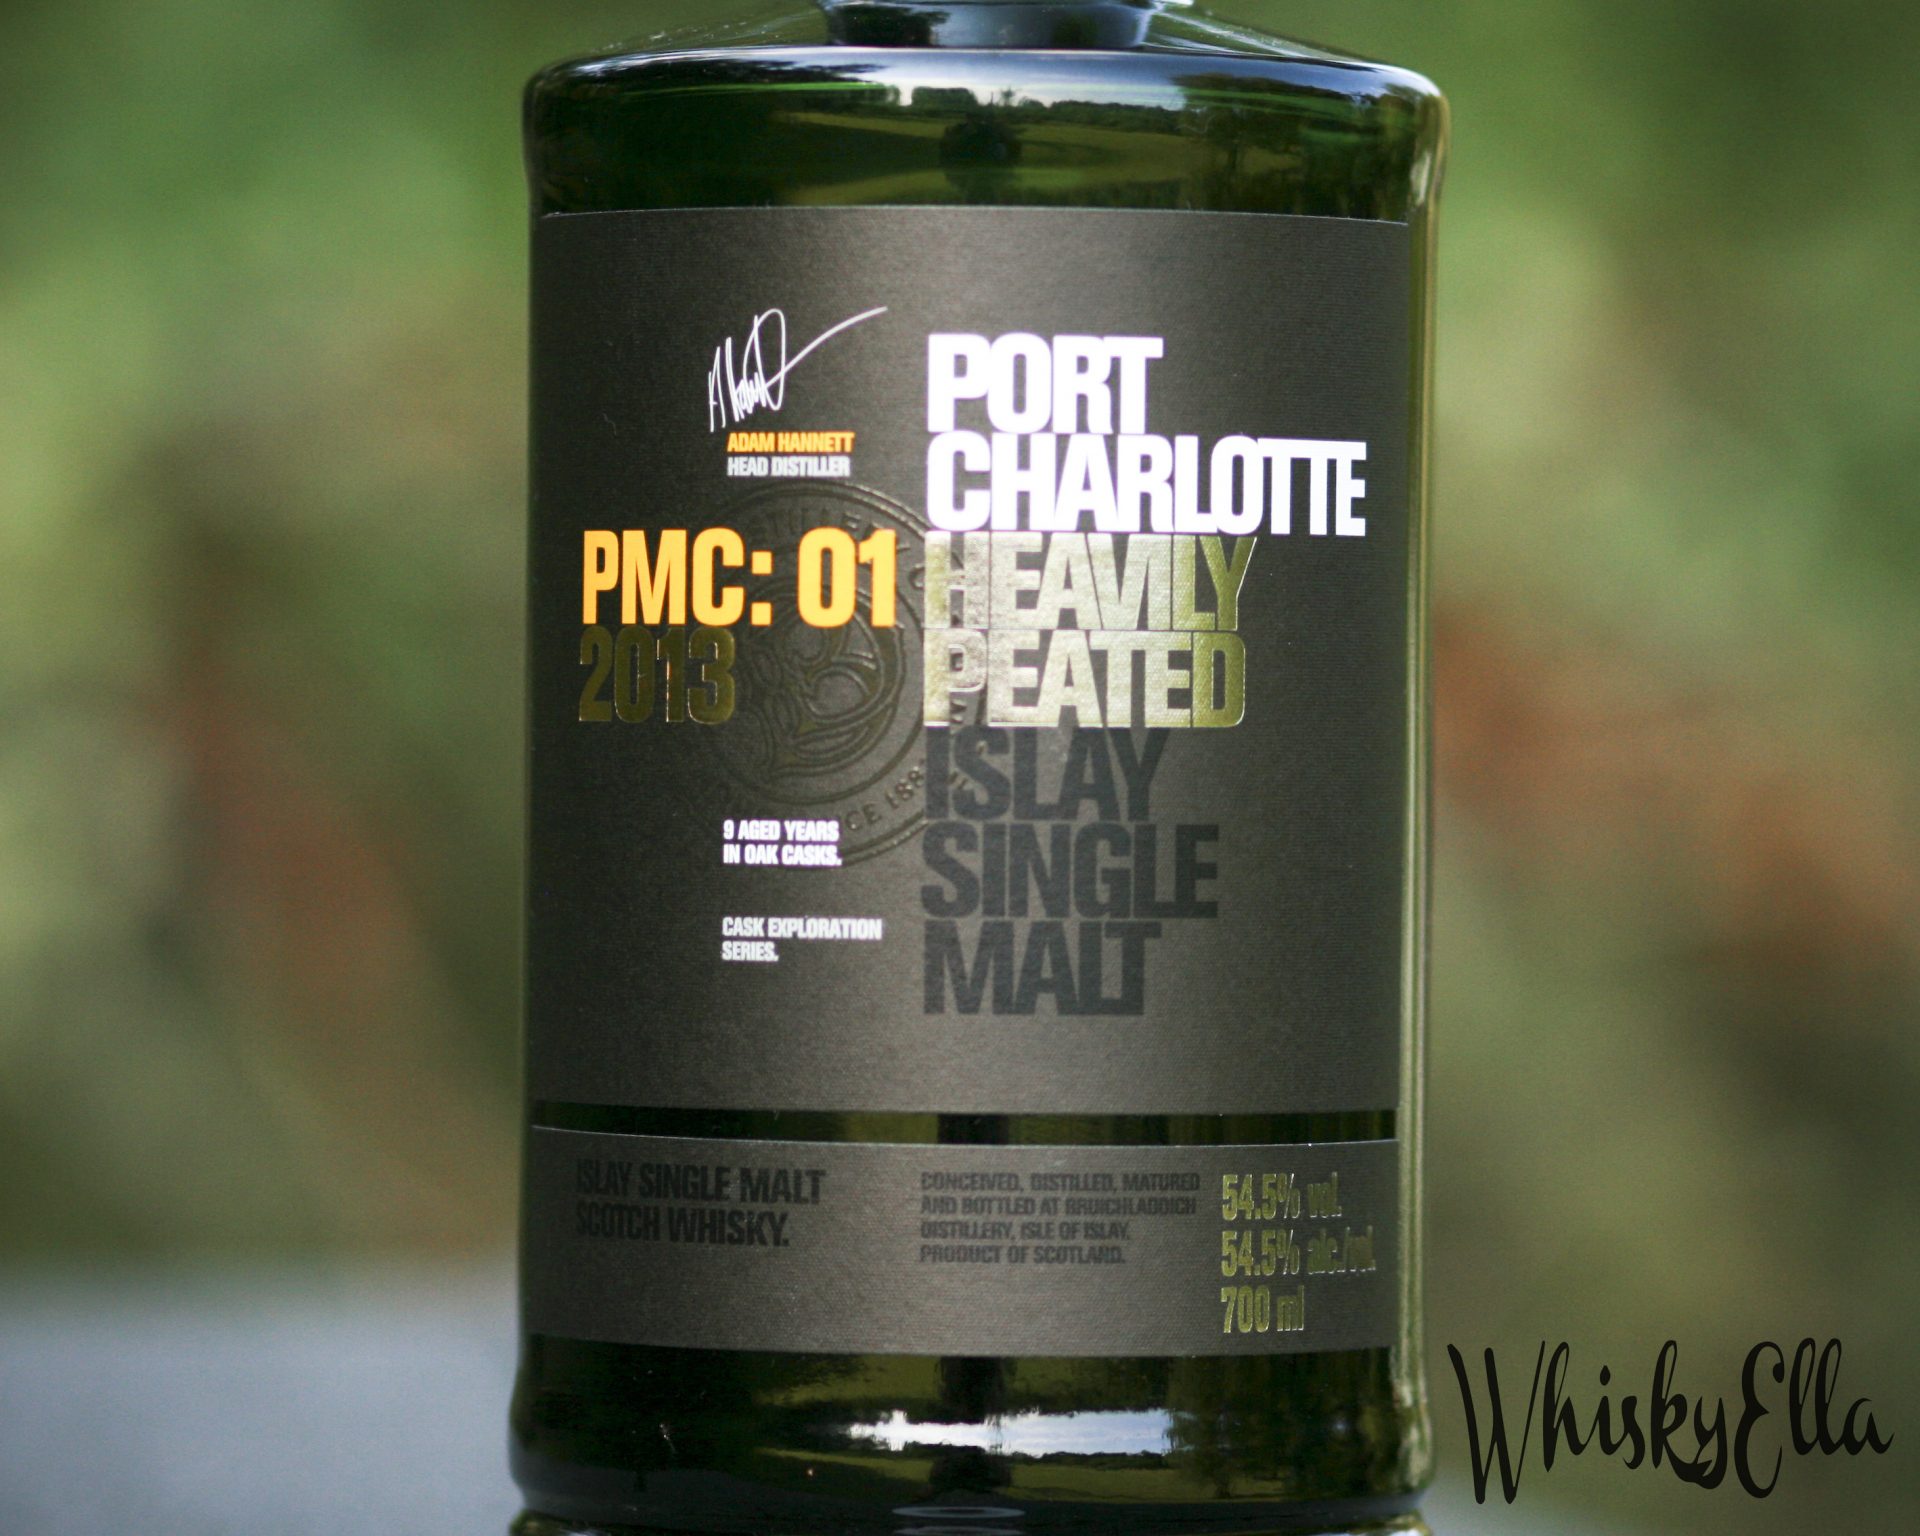 Nasza recenzja Port Charlotte PMC:01 #201